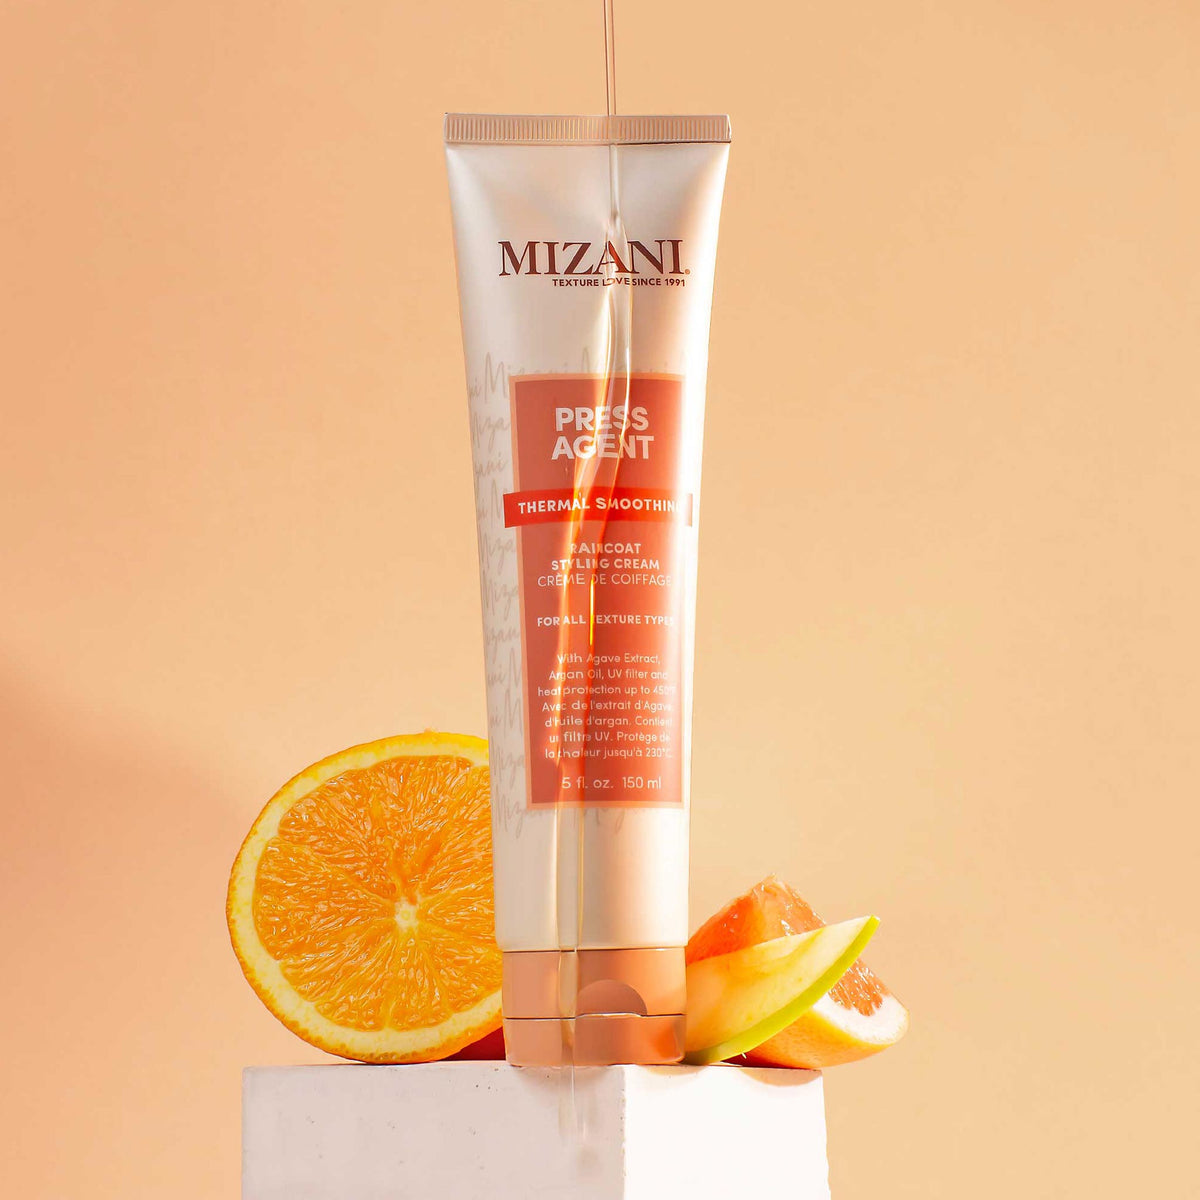 Mizani Press Agent Thermal Smoothing Raincoat Styling Cream 150ml